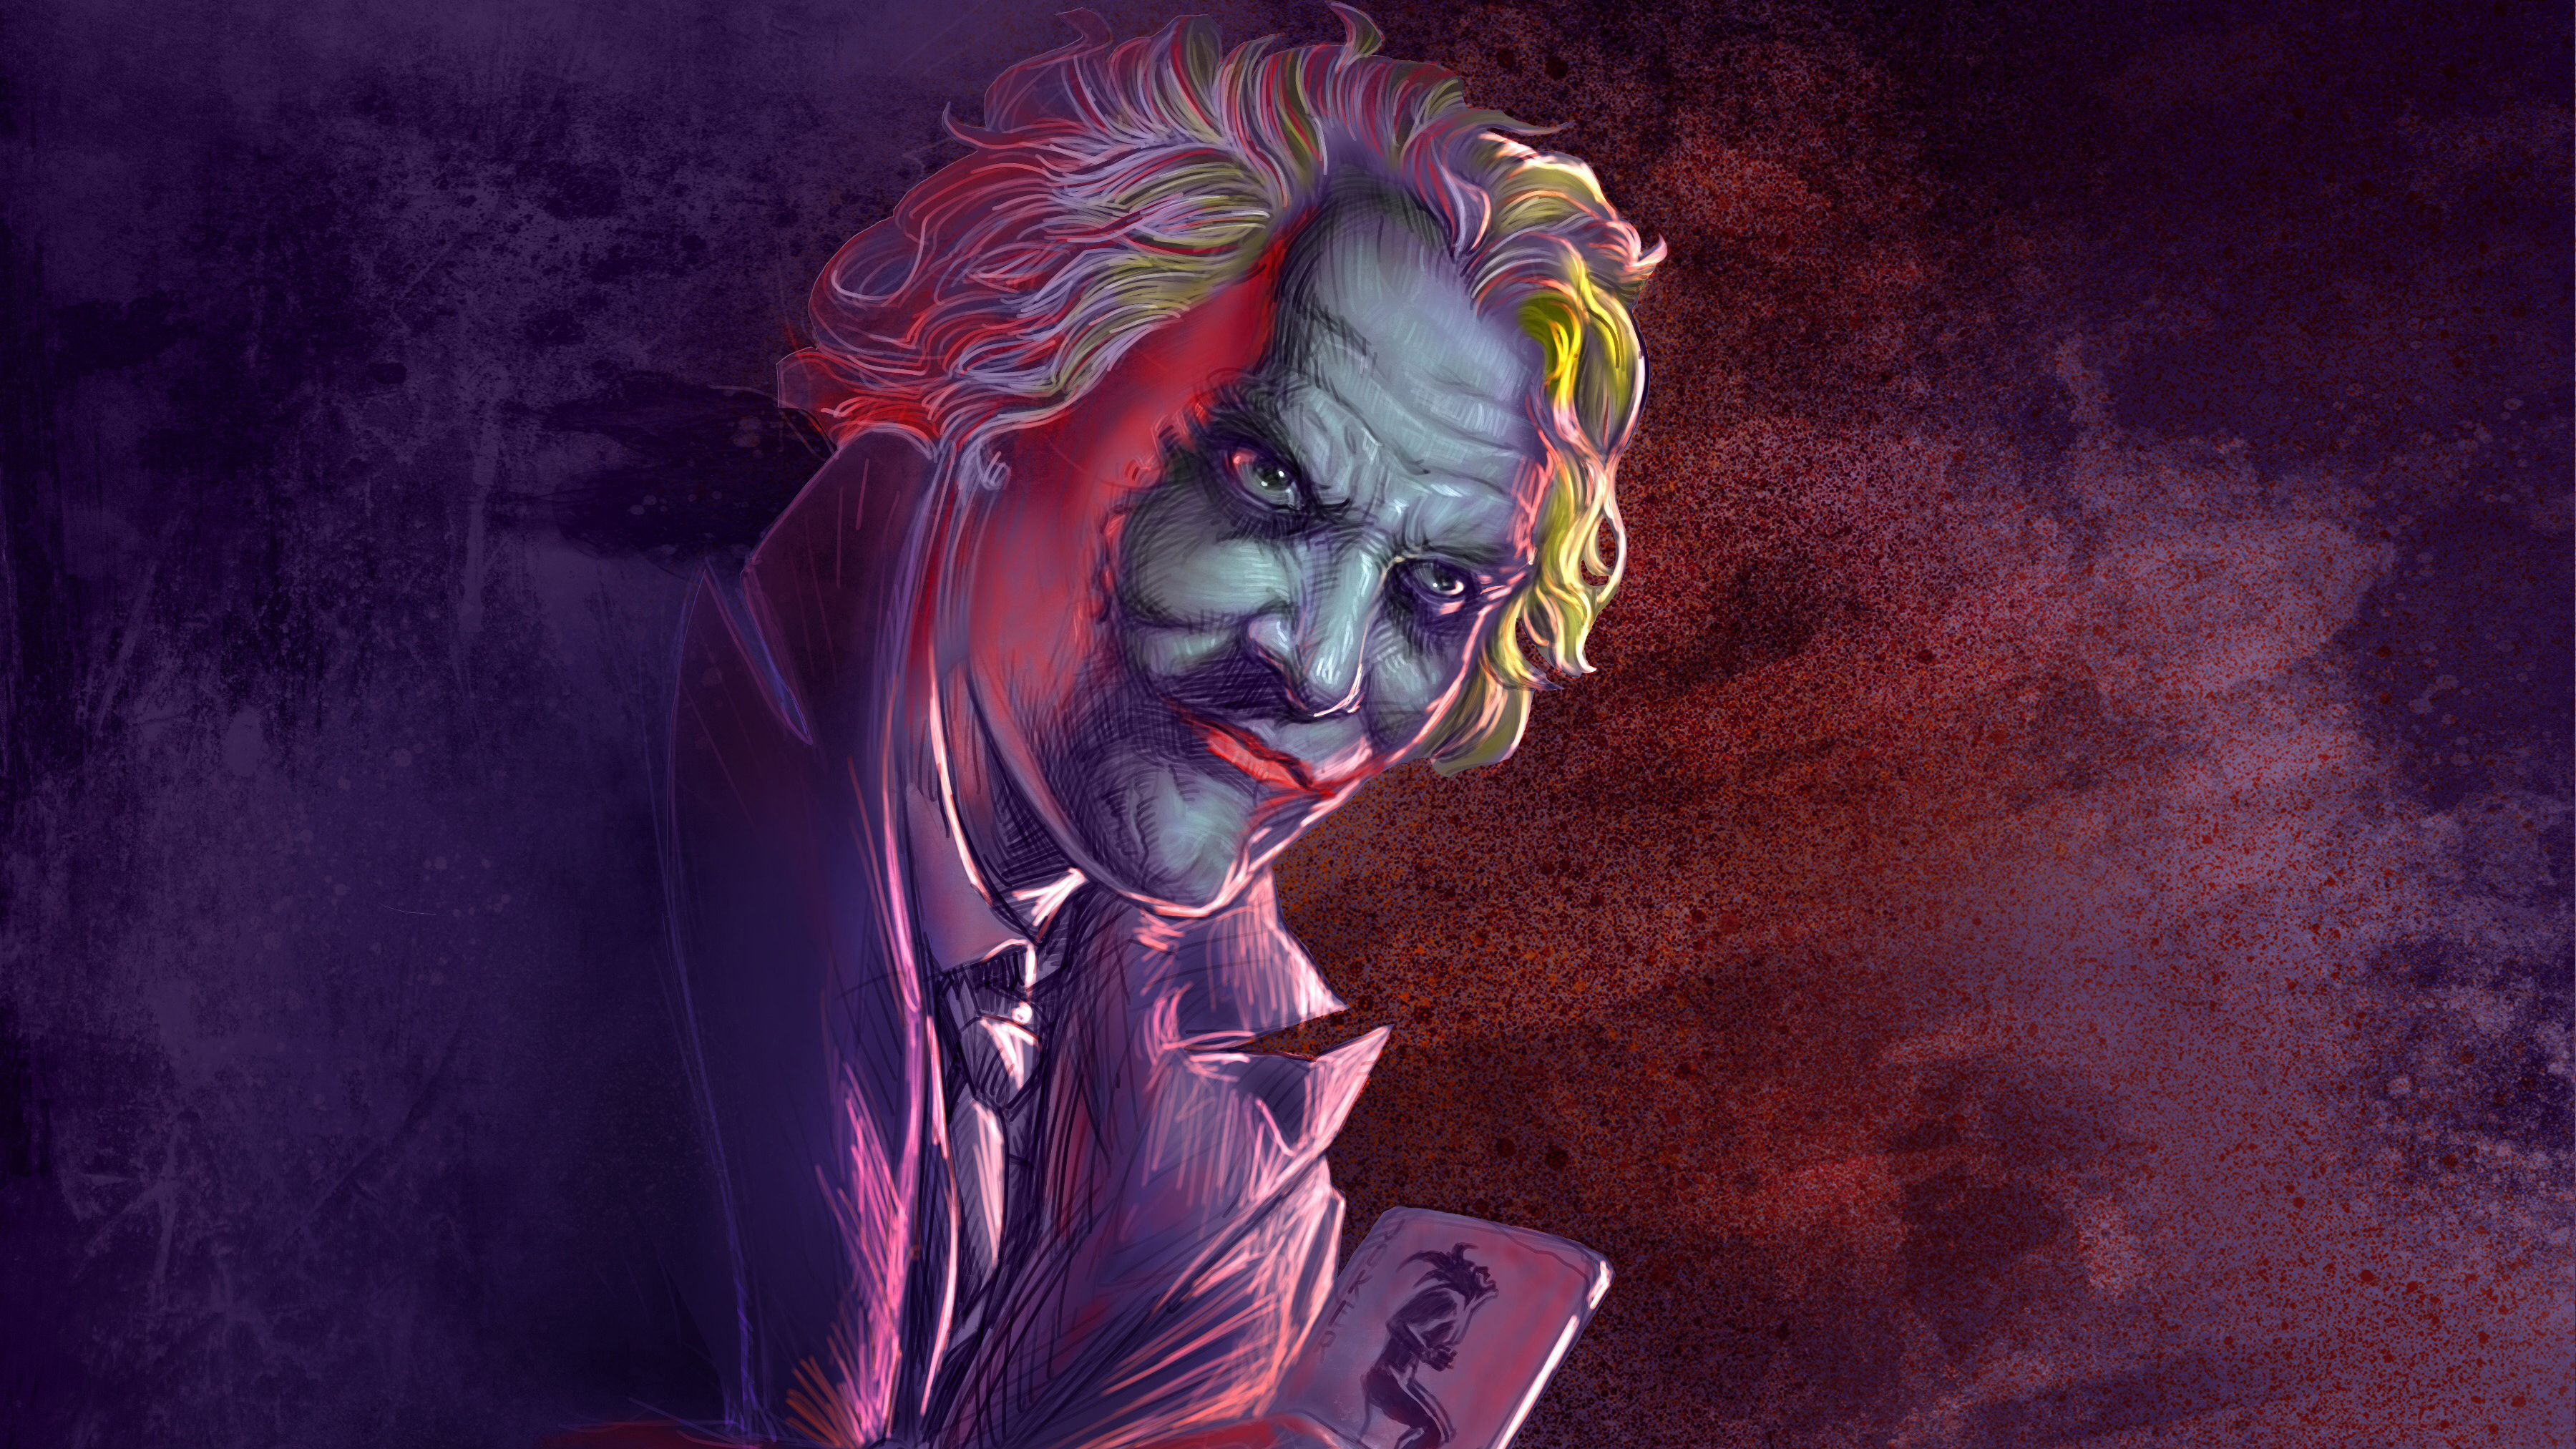 Joker Cool Illustration Wallpaper, HD Superheroes 4K ...